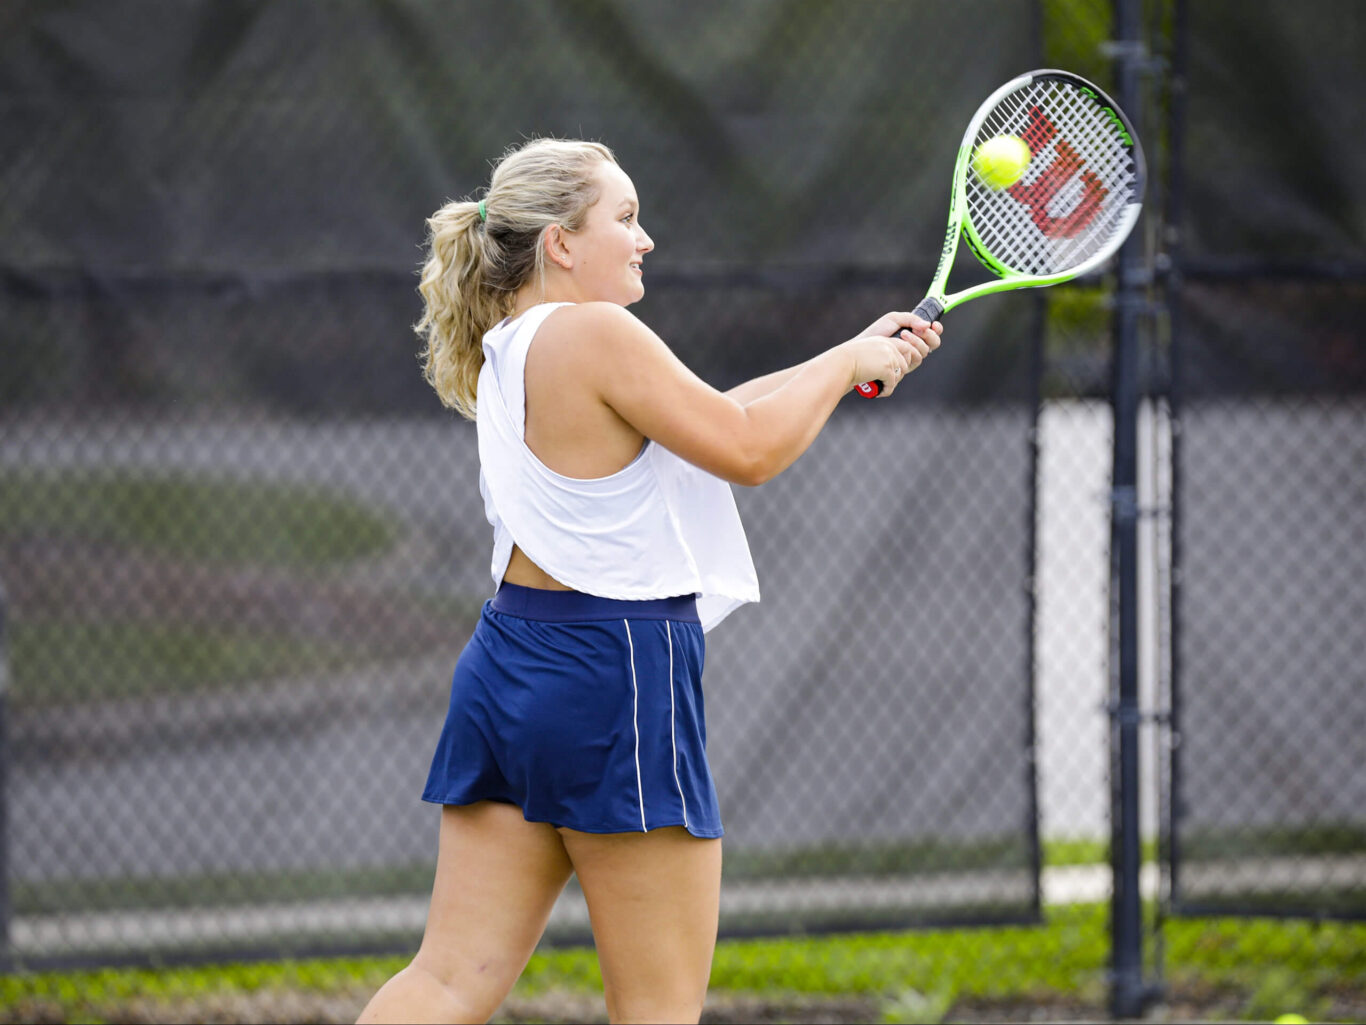 A Tennis Girl swinging a tennis racket at a ball.